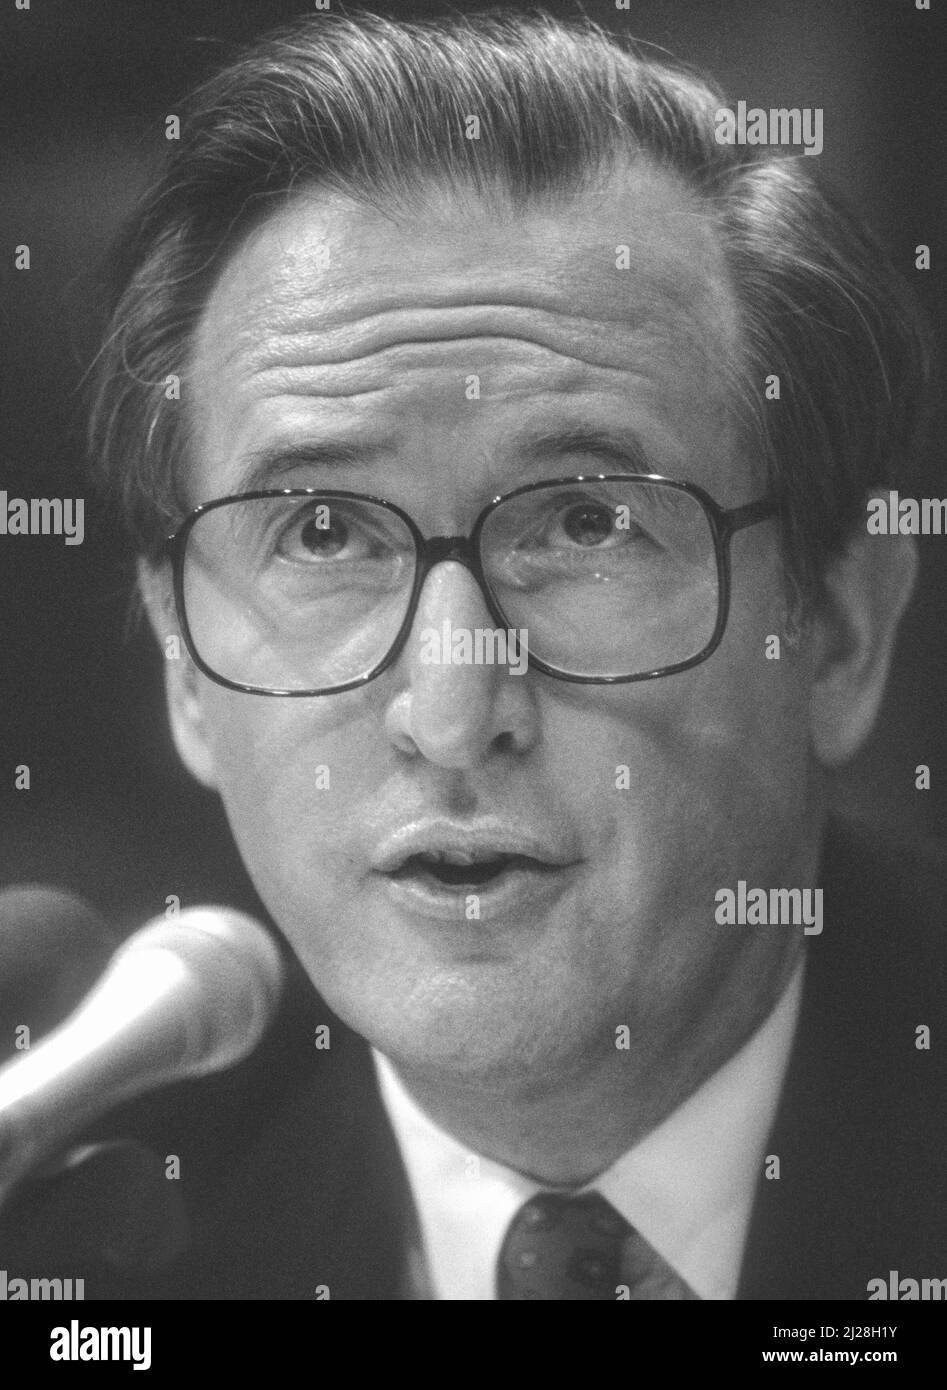 WASHINGTON, DC, USA - U.S. Senator Jay Rockefeller (D-WV) speaking during committee hearing,.February 1992. Stock Photo